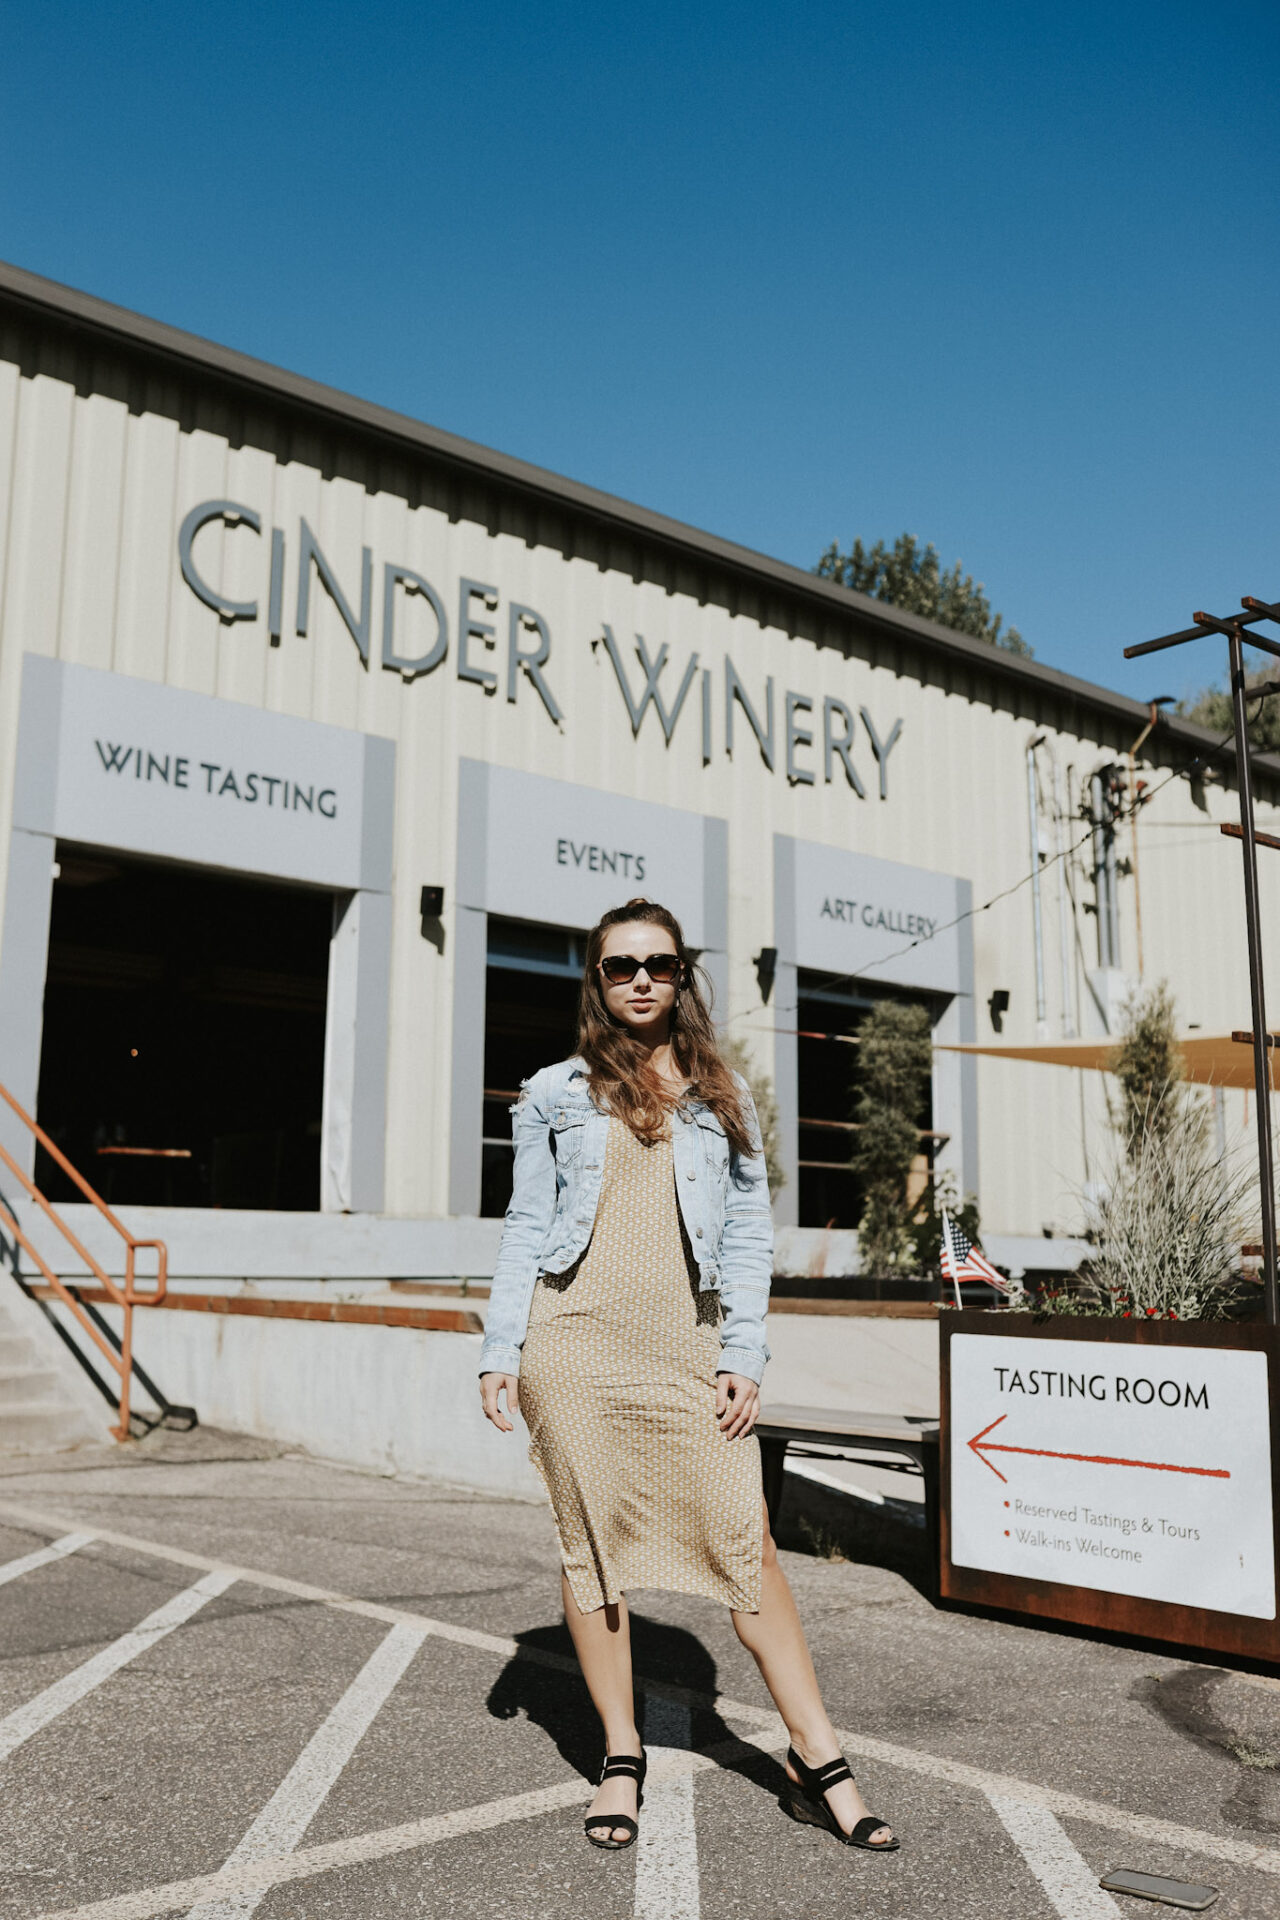 Cinder Winery Boise Tasting Room